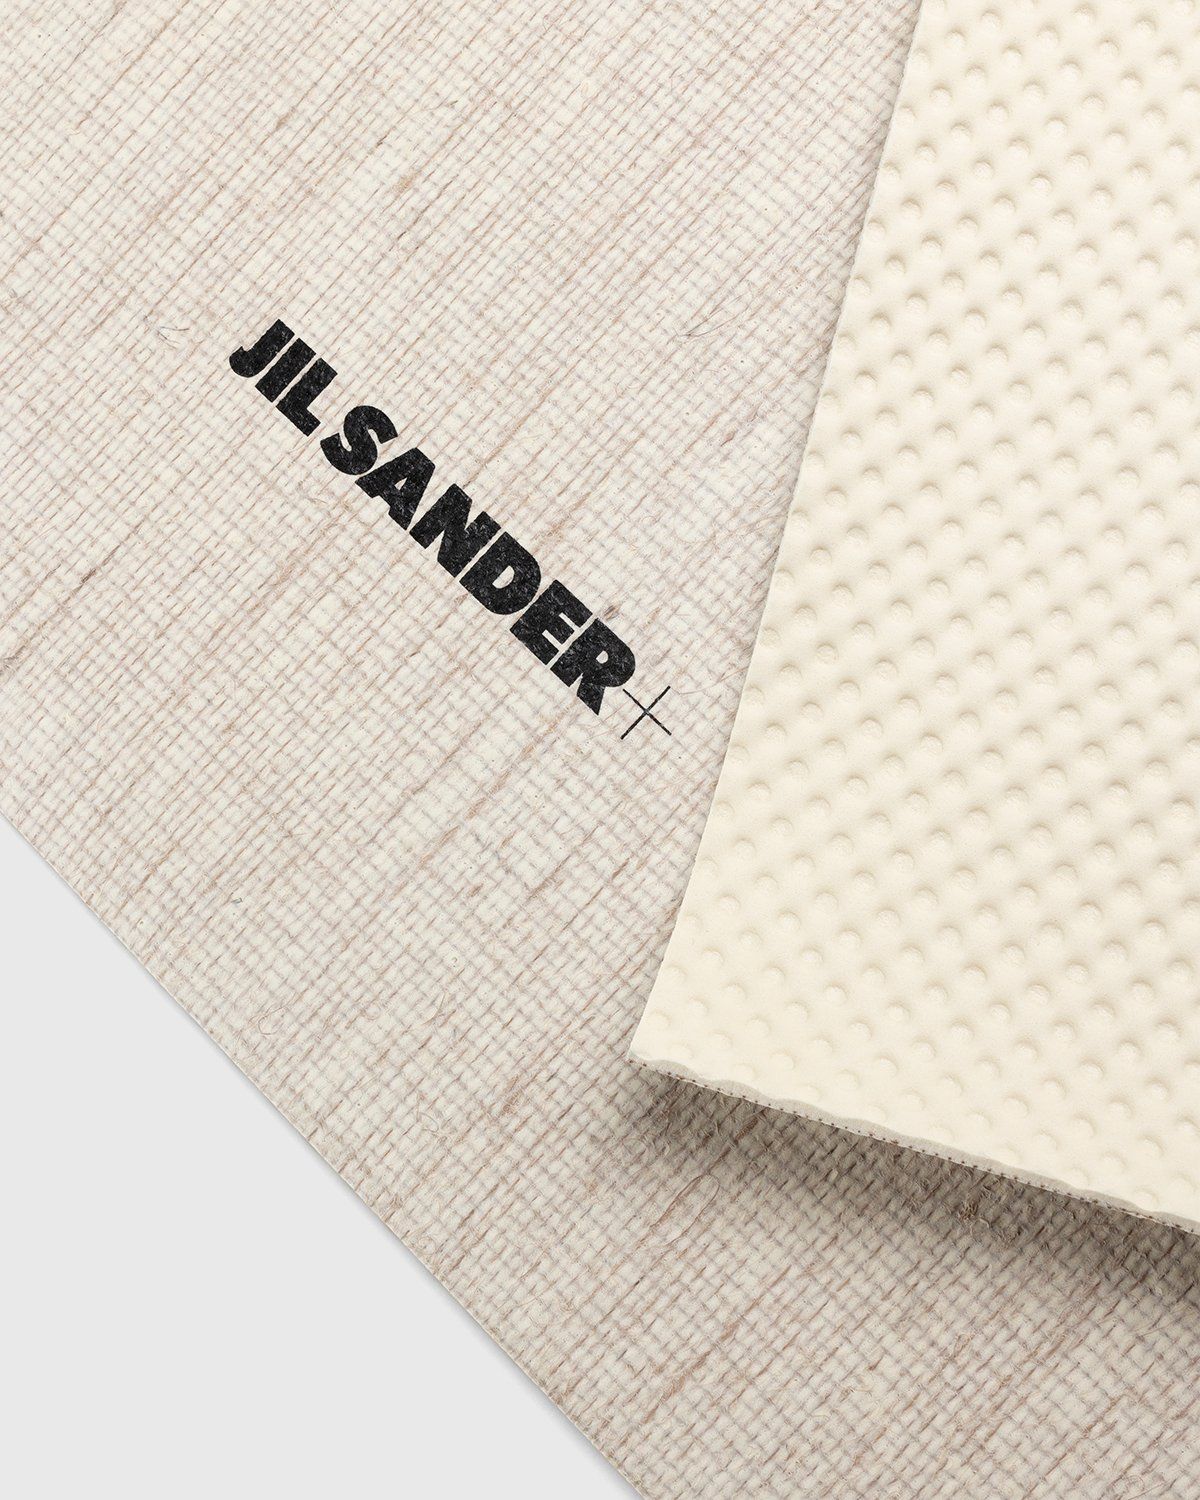 Jil Sander yoga carpet with logo – LECLAIREUR